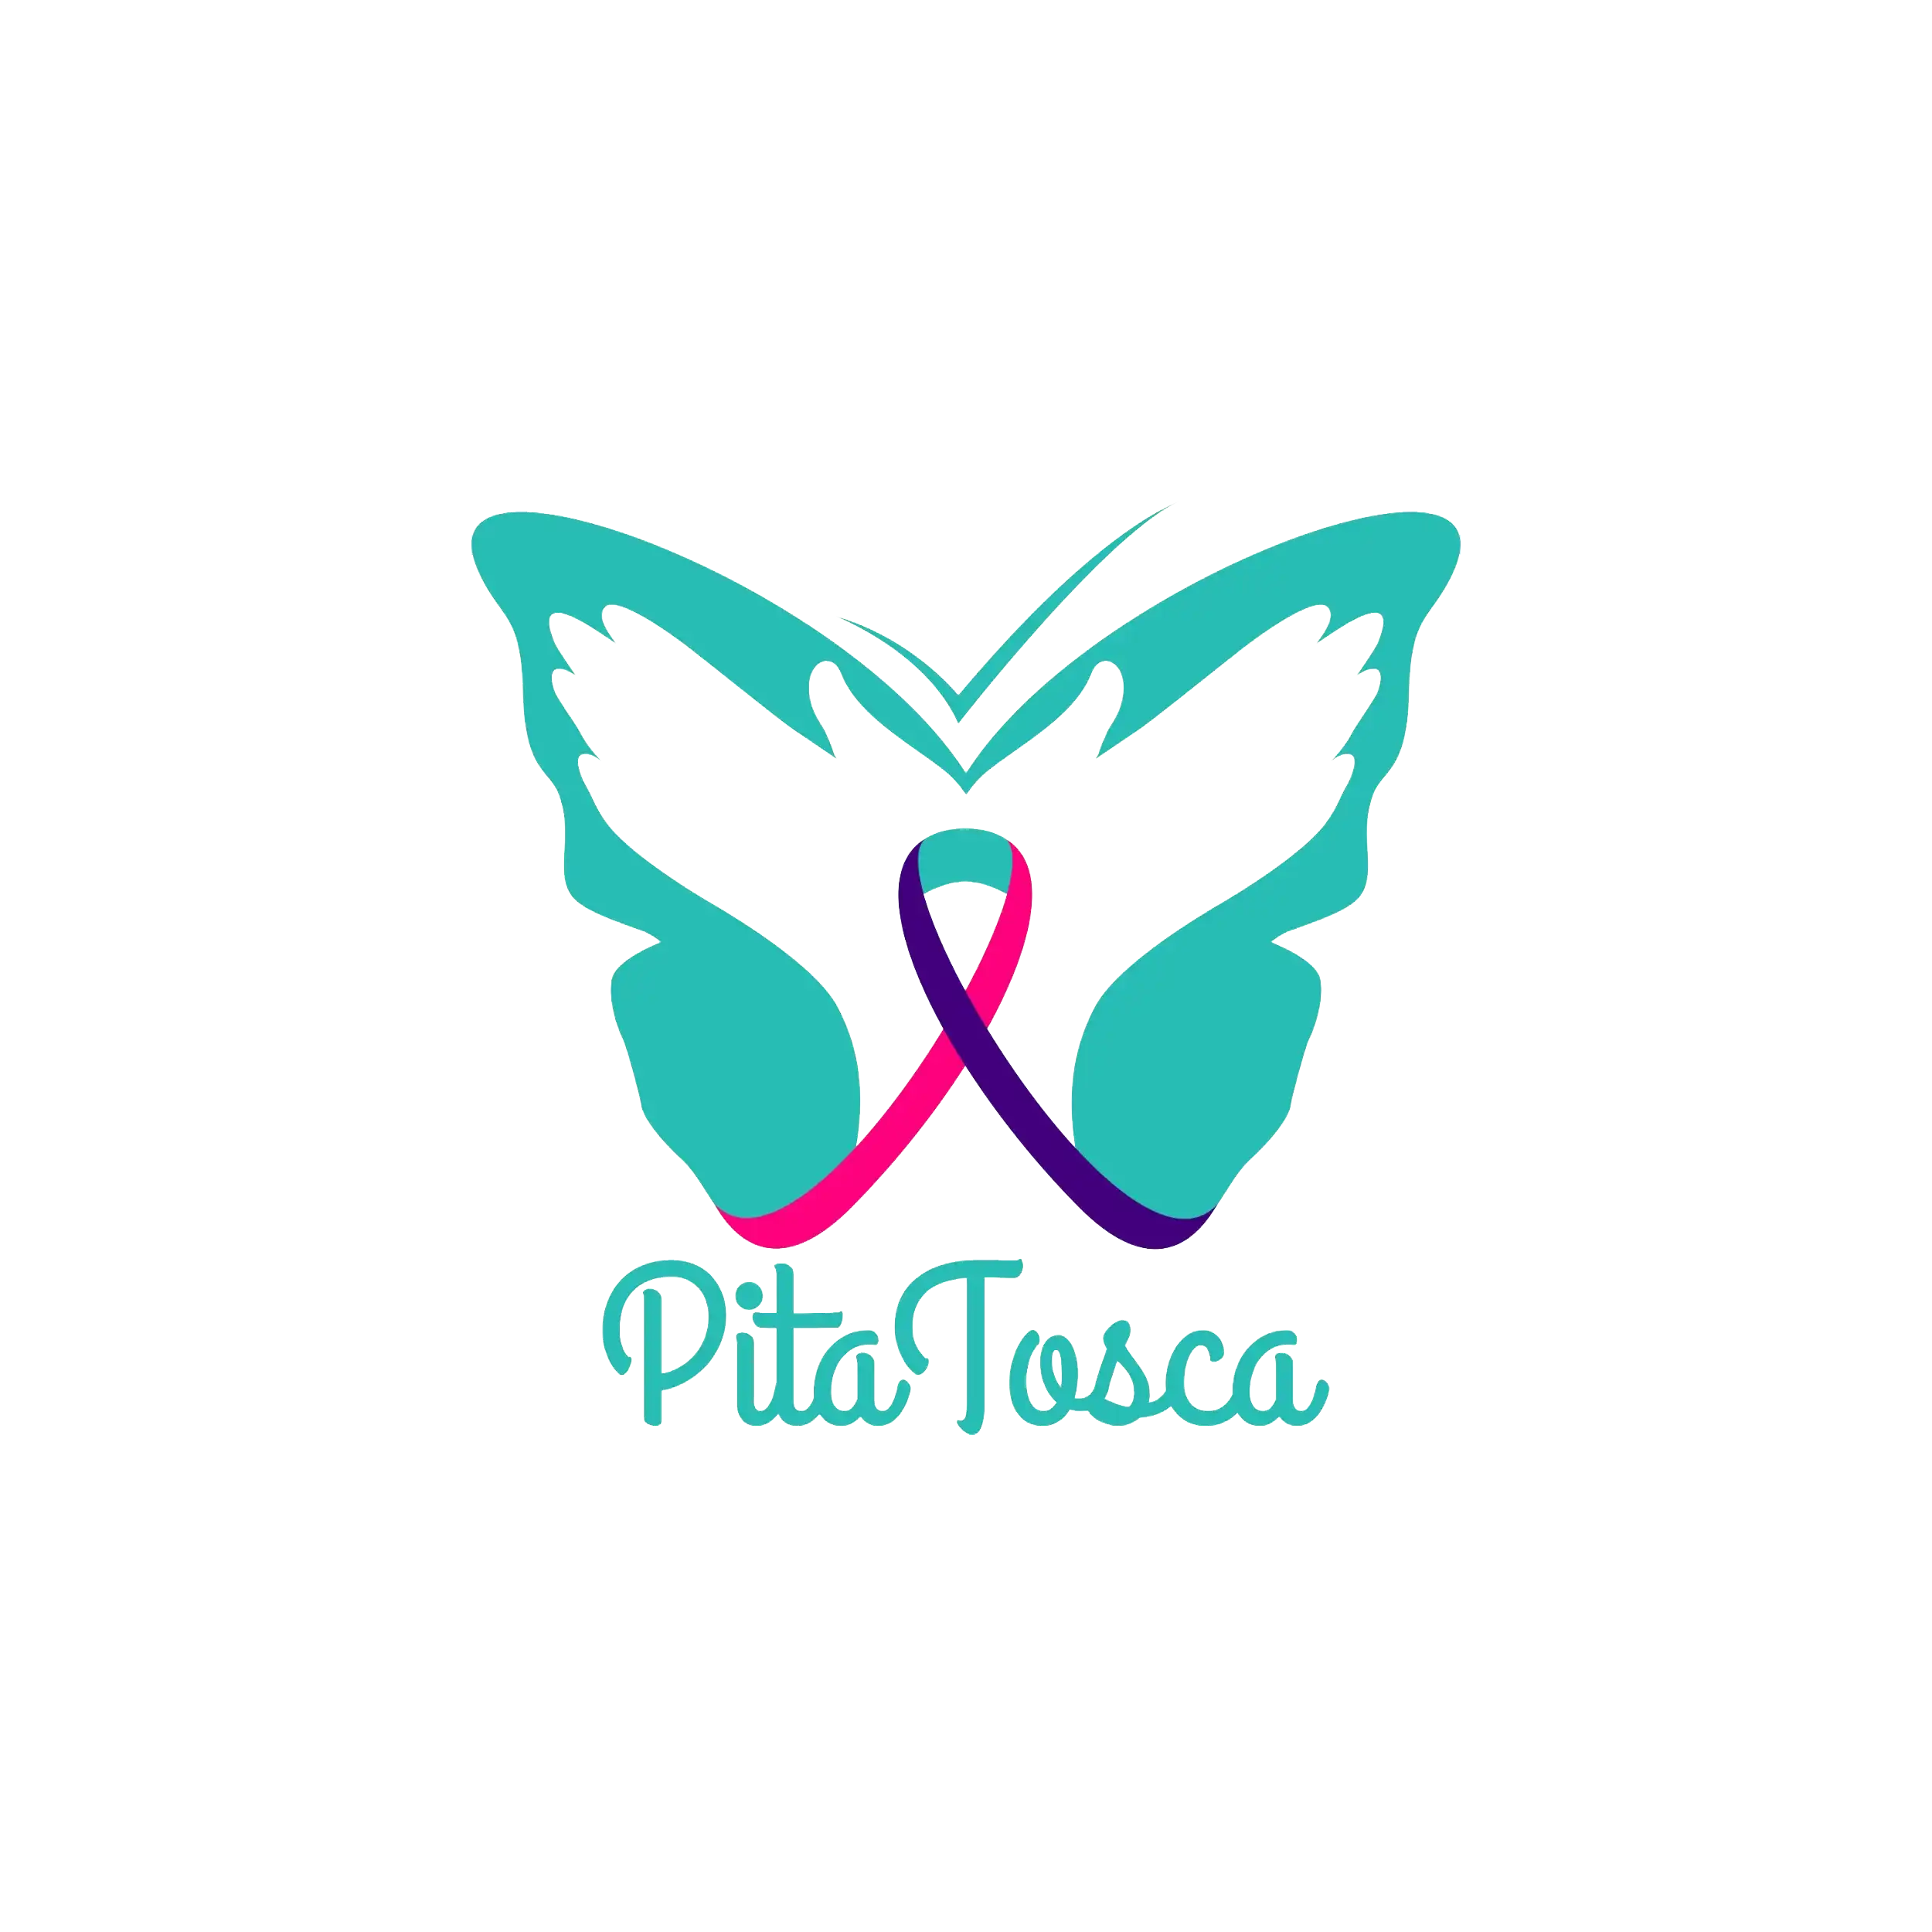 1678678680_logo-pita-tosca.webp